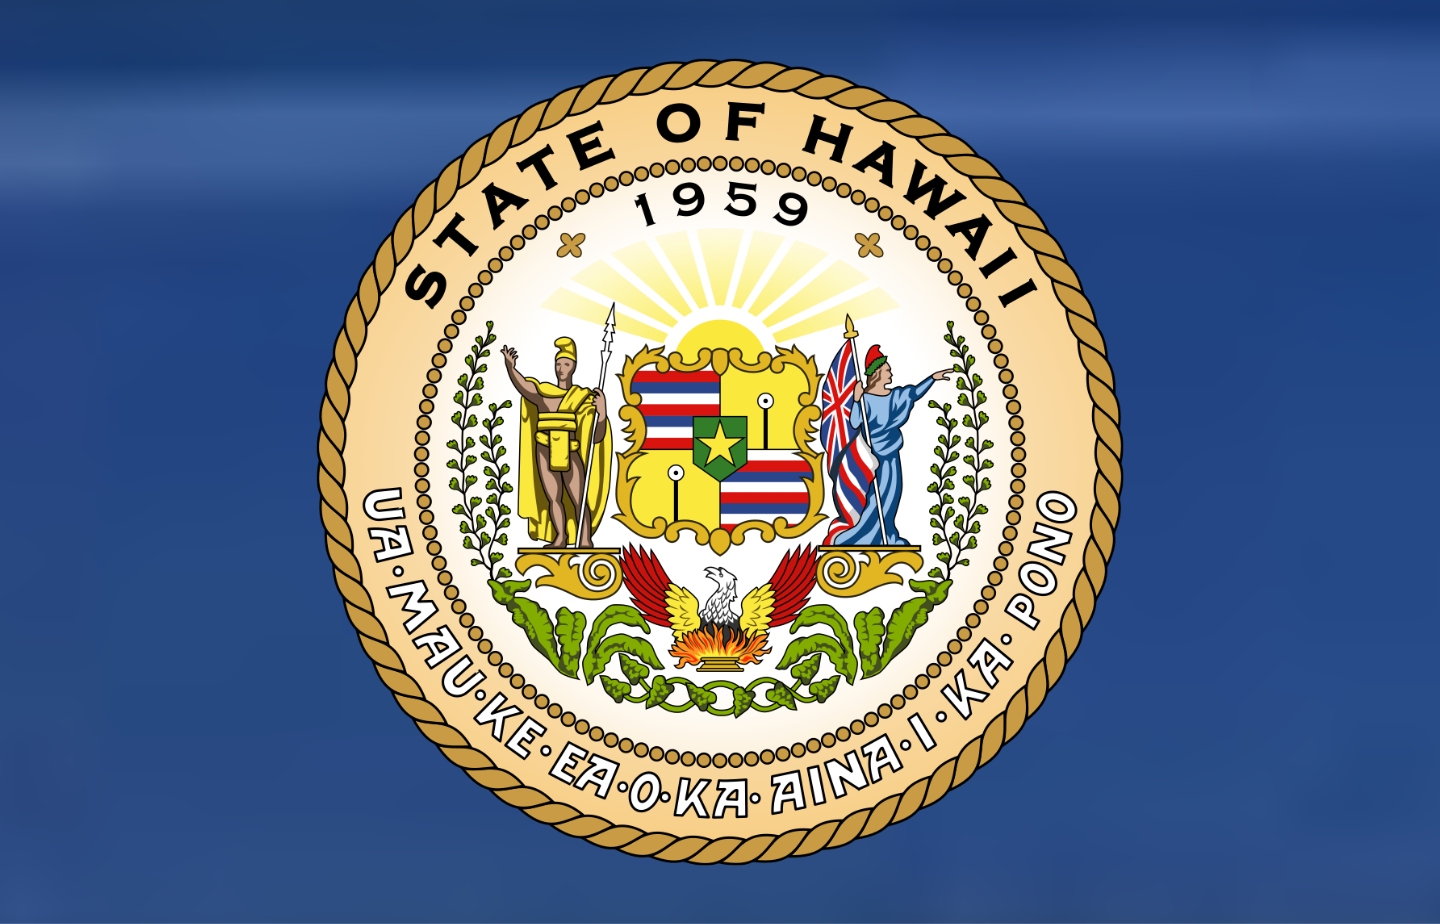 State of Hawaiʻi seal.